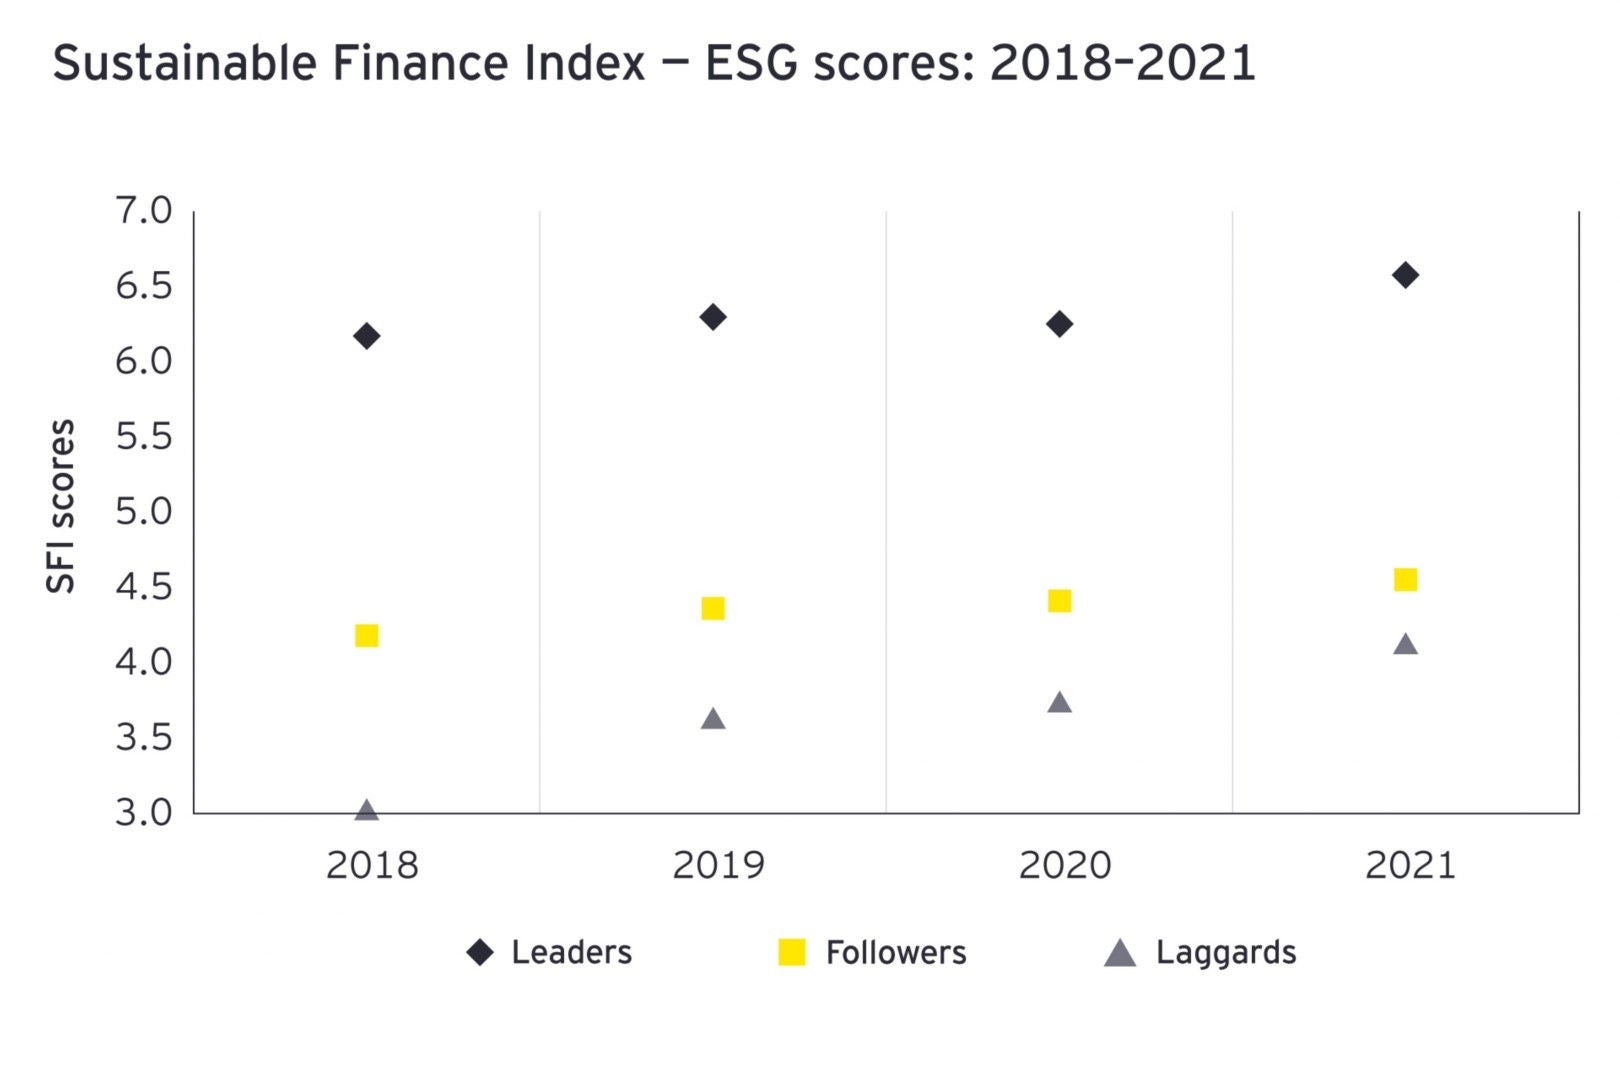 EY Sustainable Finance Index 22esg Scores 2018-2021